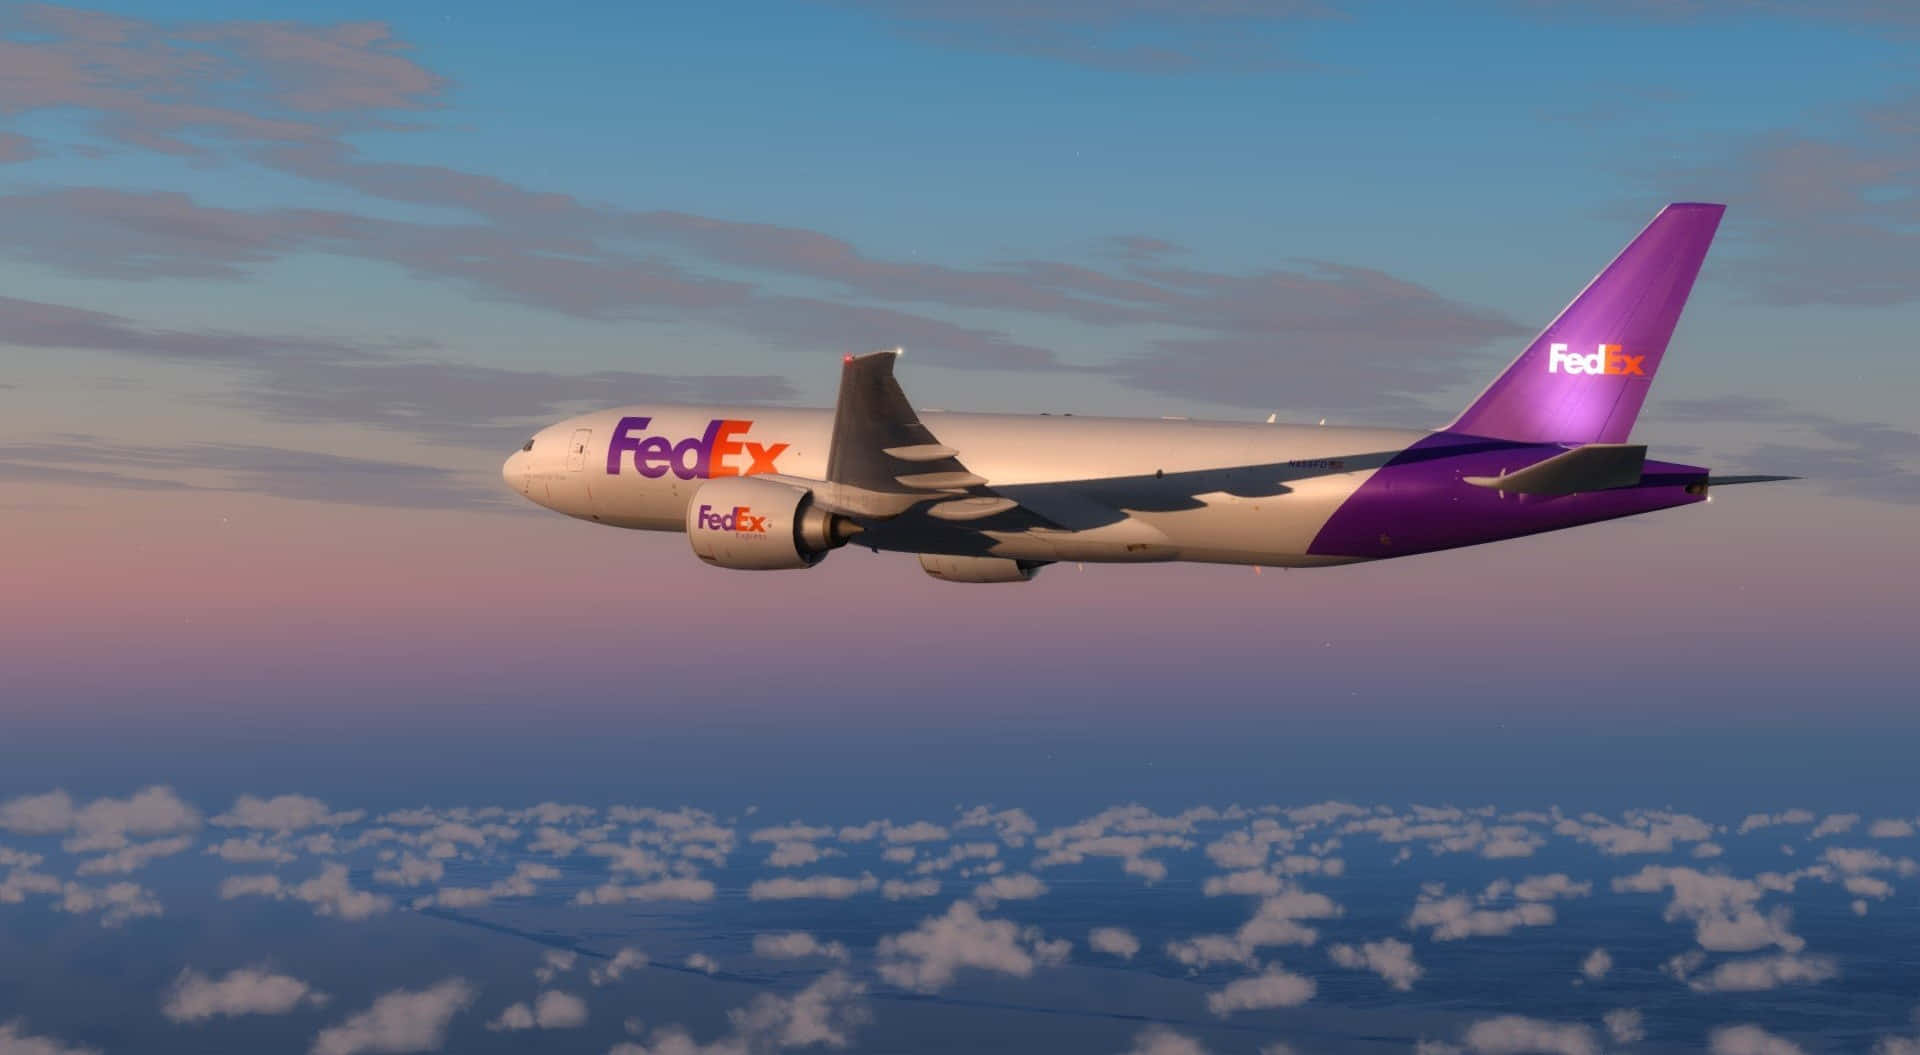 Fedex Boeing 737-800 - Fbi - Fbi - Fbi - Fb